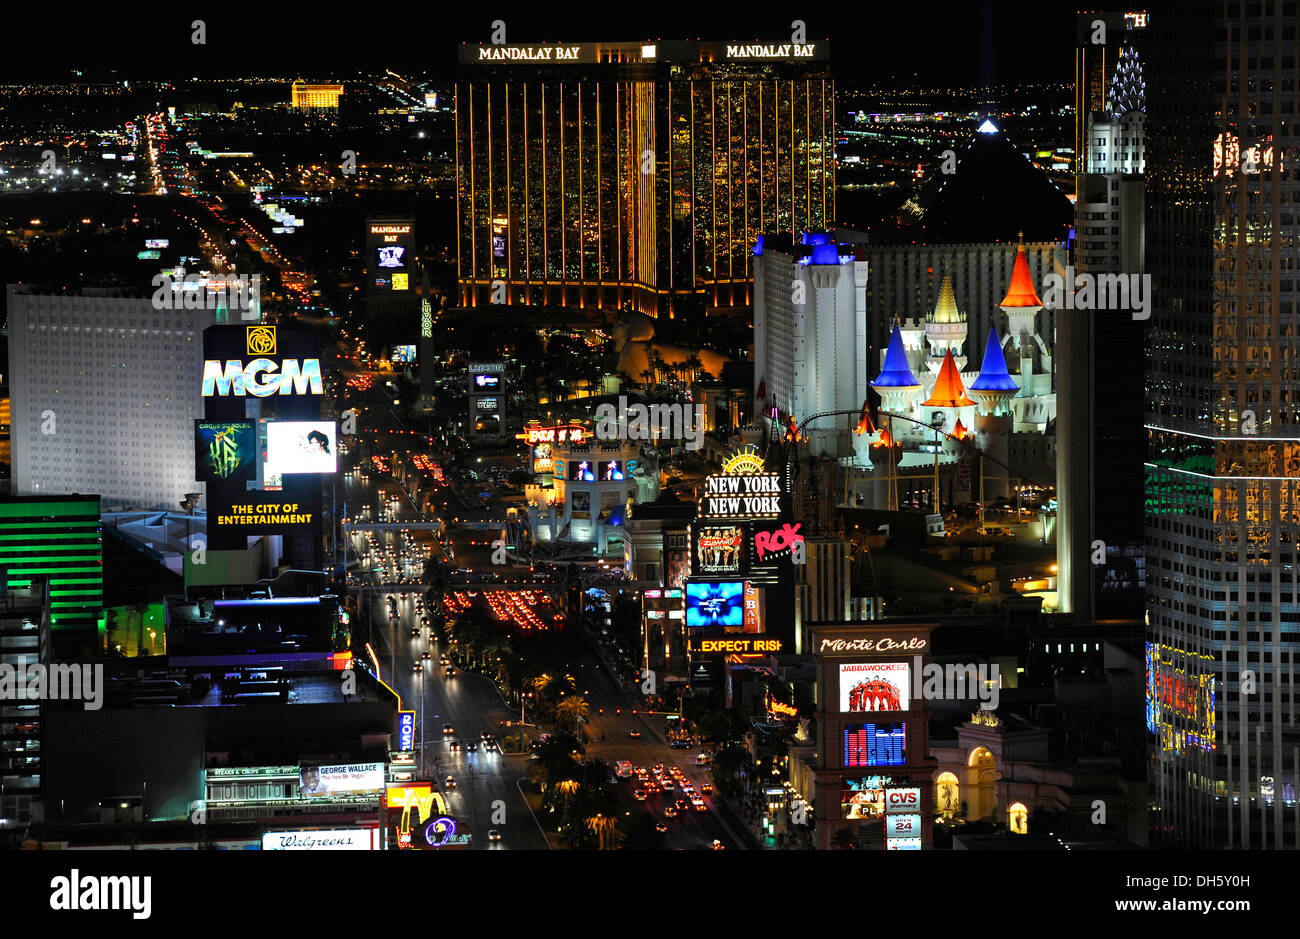 Night shot, The Strip, MGM Grand luxury hotel, New York, Mandalay Bay, Excalibur Hotel, Las Vegas, Nevada, USA Stock Photo